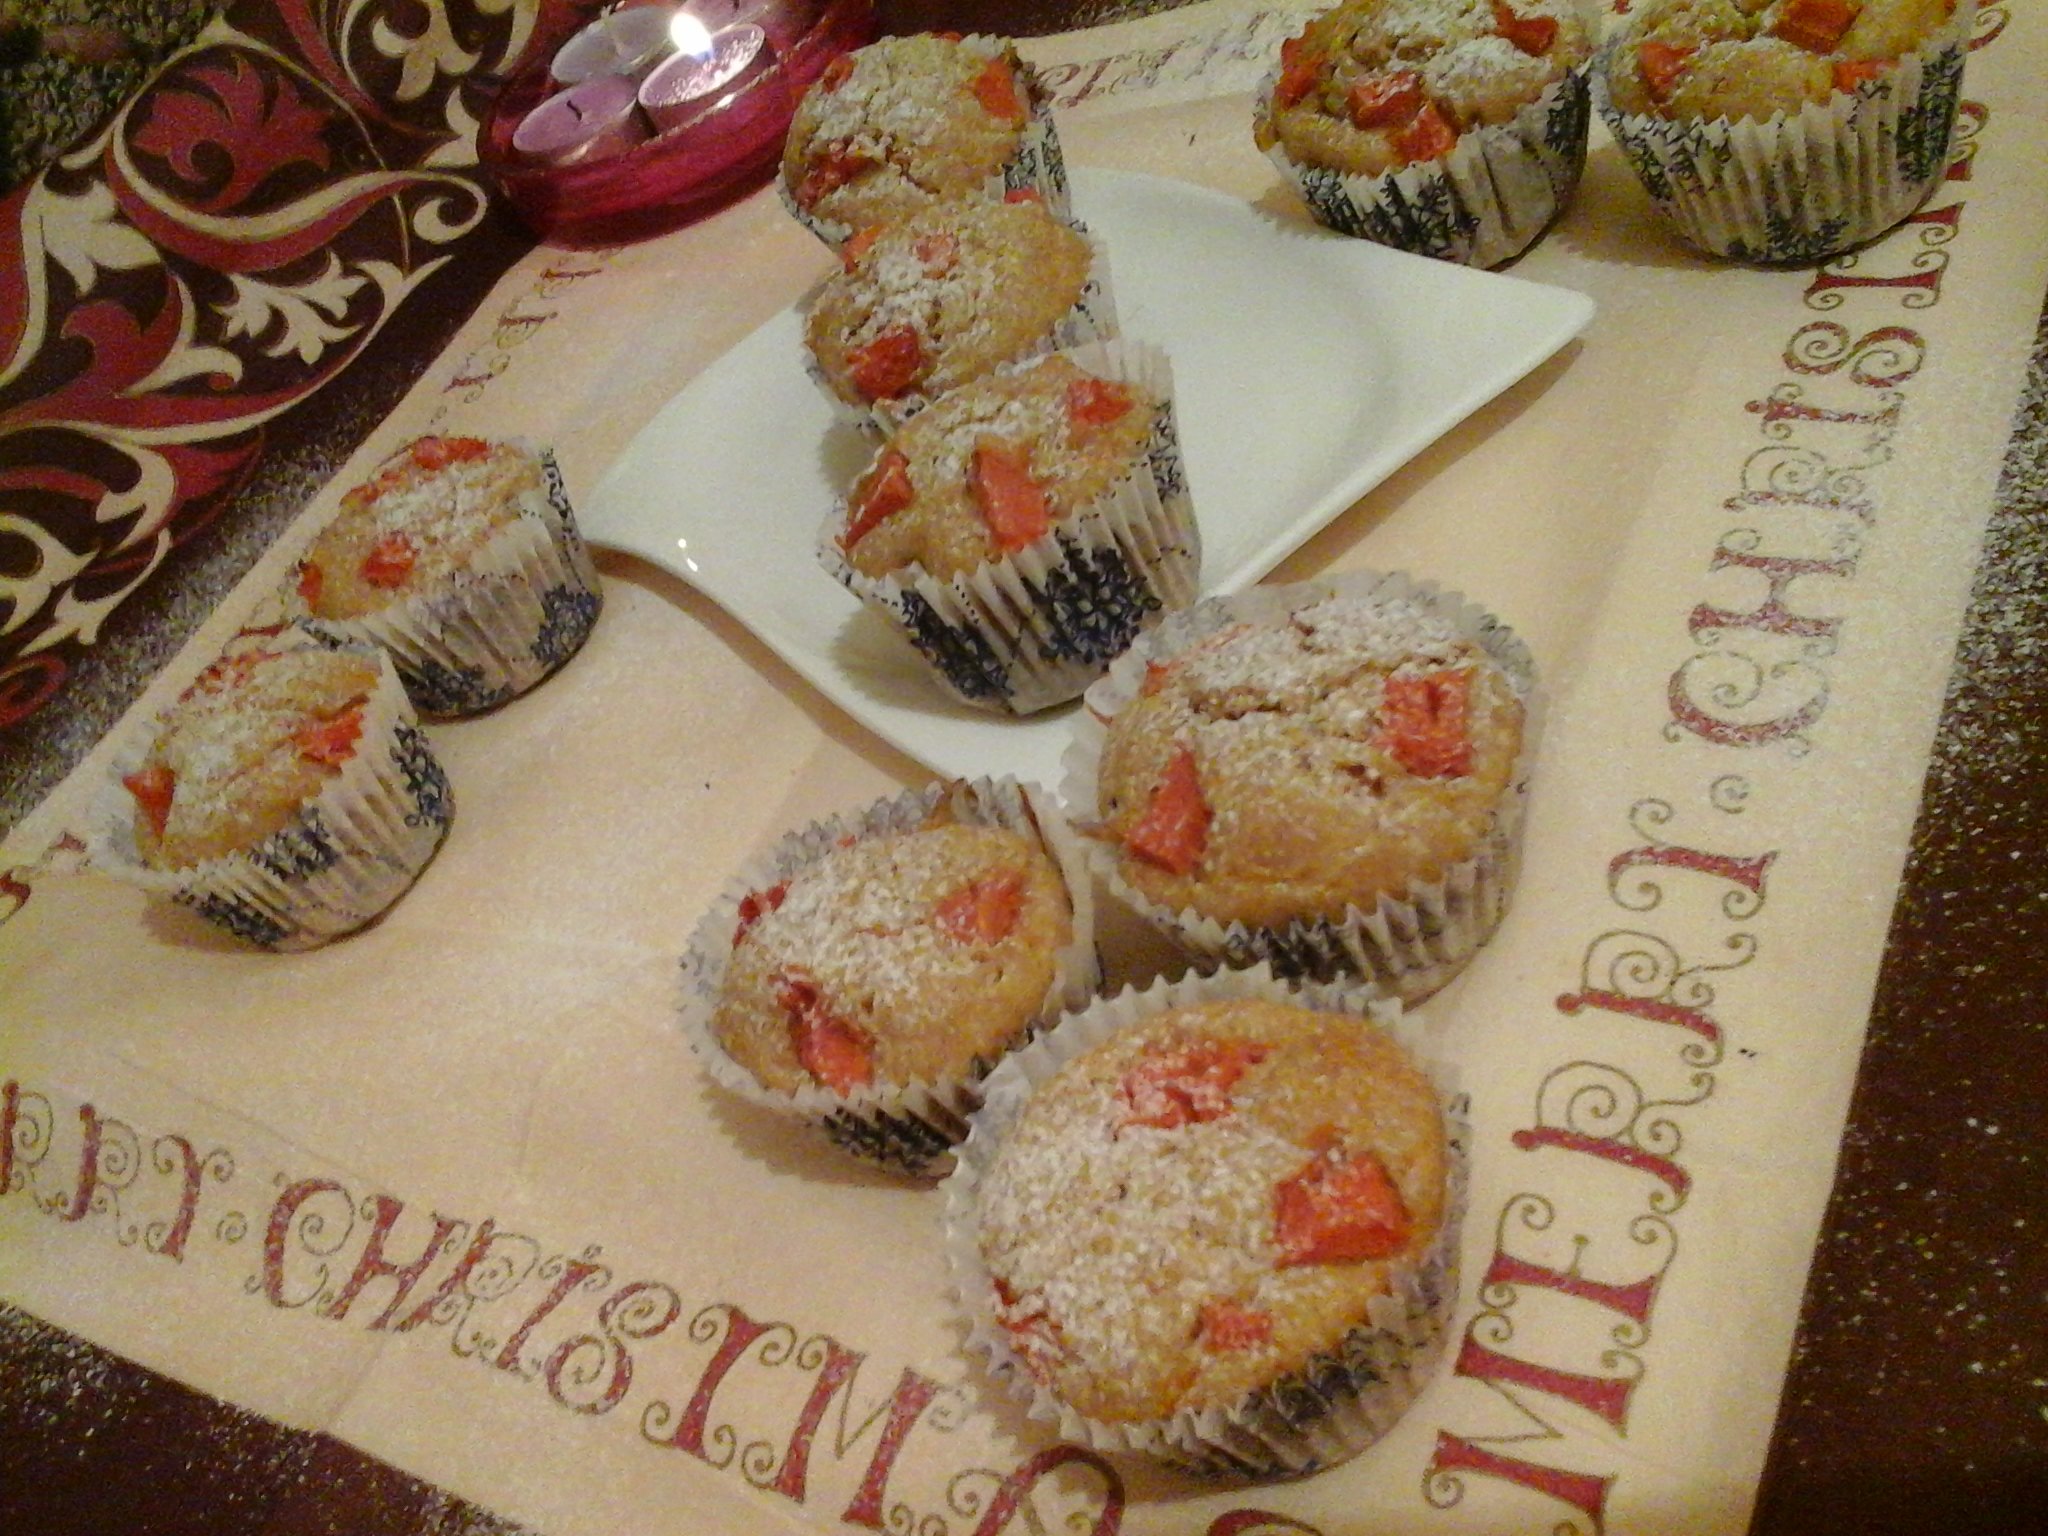 Rozmaringos sütőtökös muffin karácsonyra - recepttel